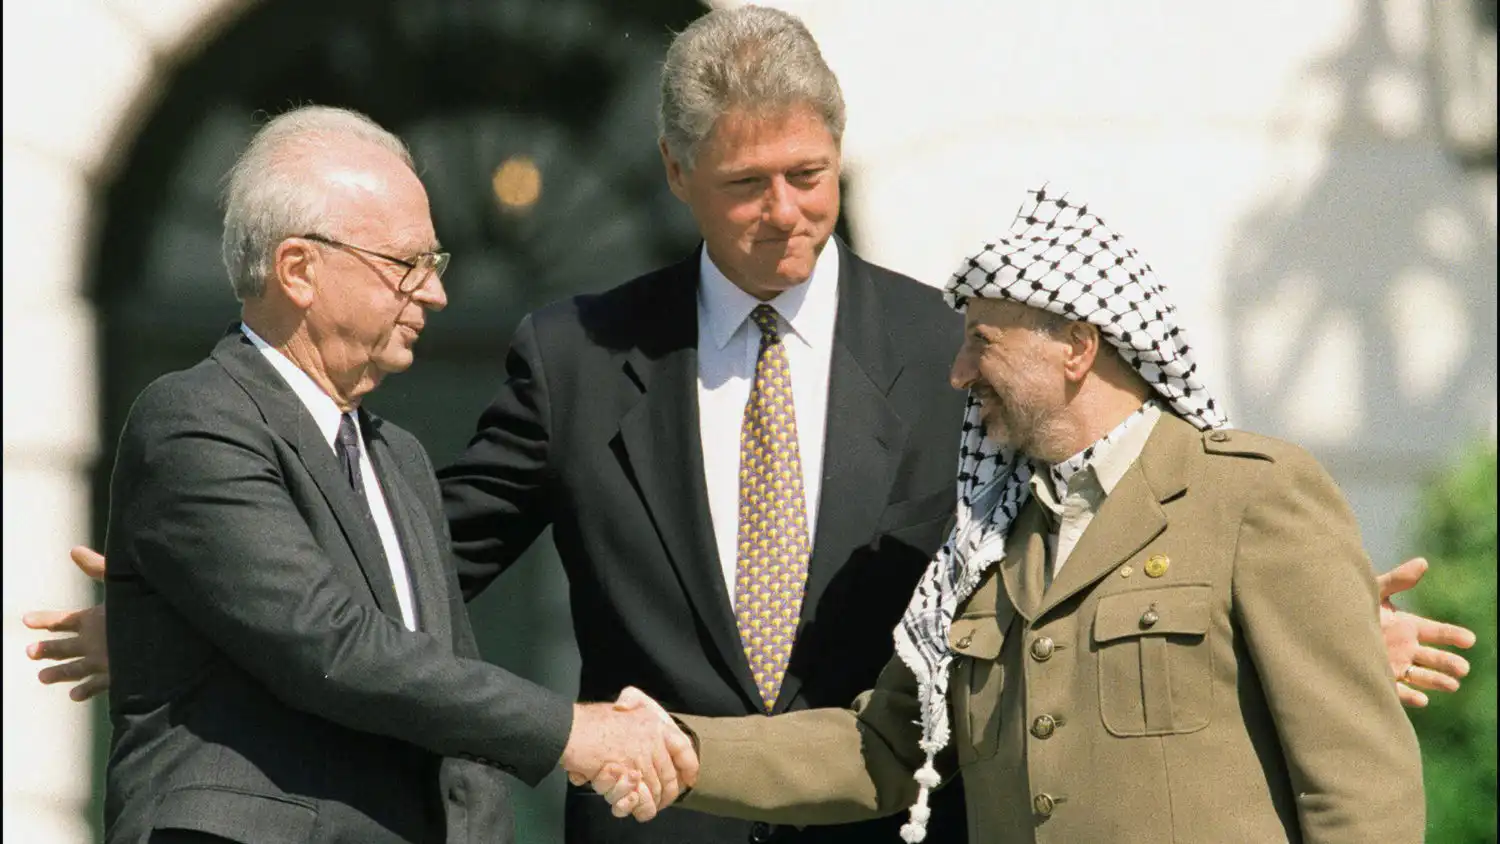 The Handshake (1993) Copyright David Ake AFP Getty Images